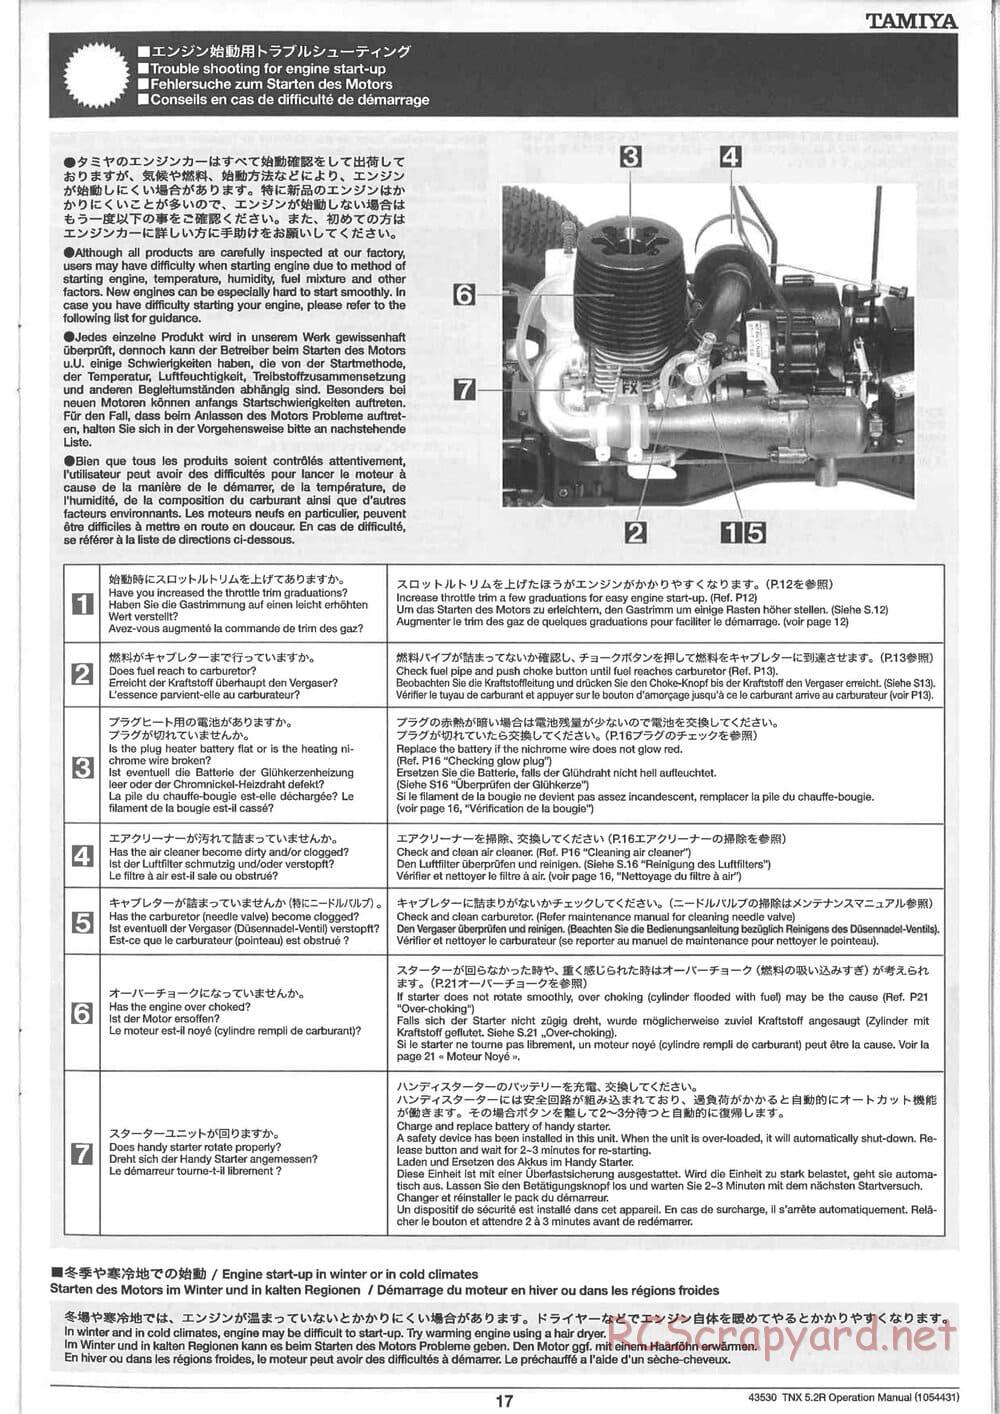 Tamiya - TNX 5.2R - TGM-04 - Operating Manual - Page 17